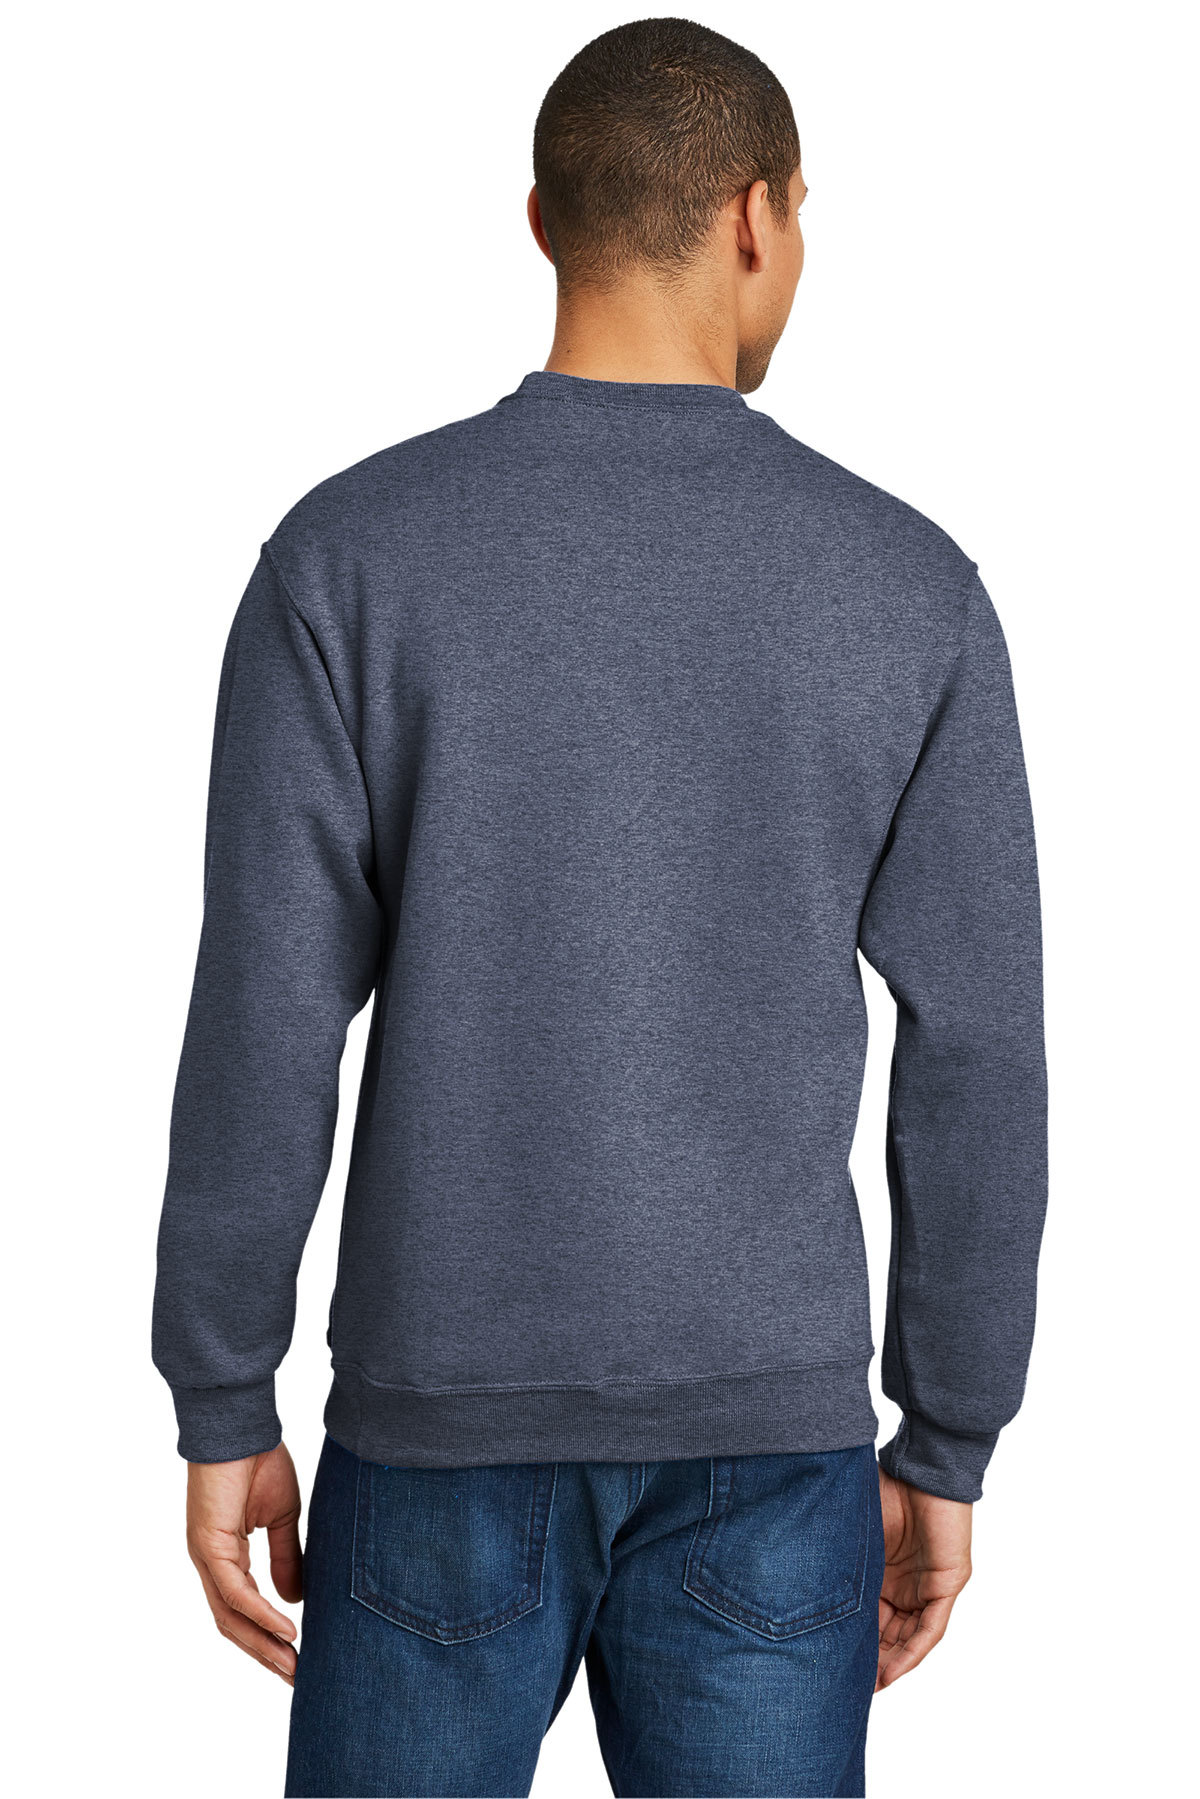 JERZEES - NuBlend Crewneck Sweatshirt | Product | SanMar